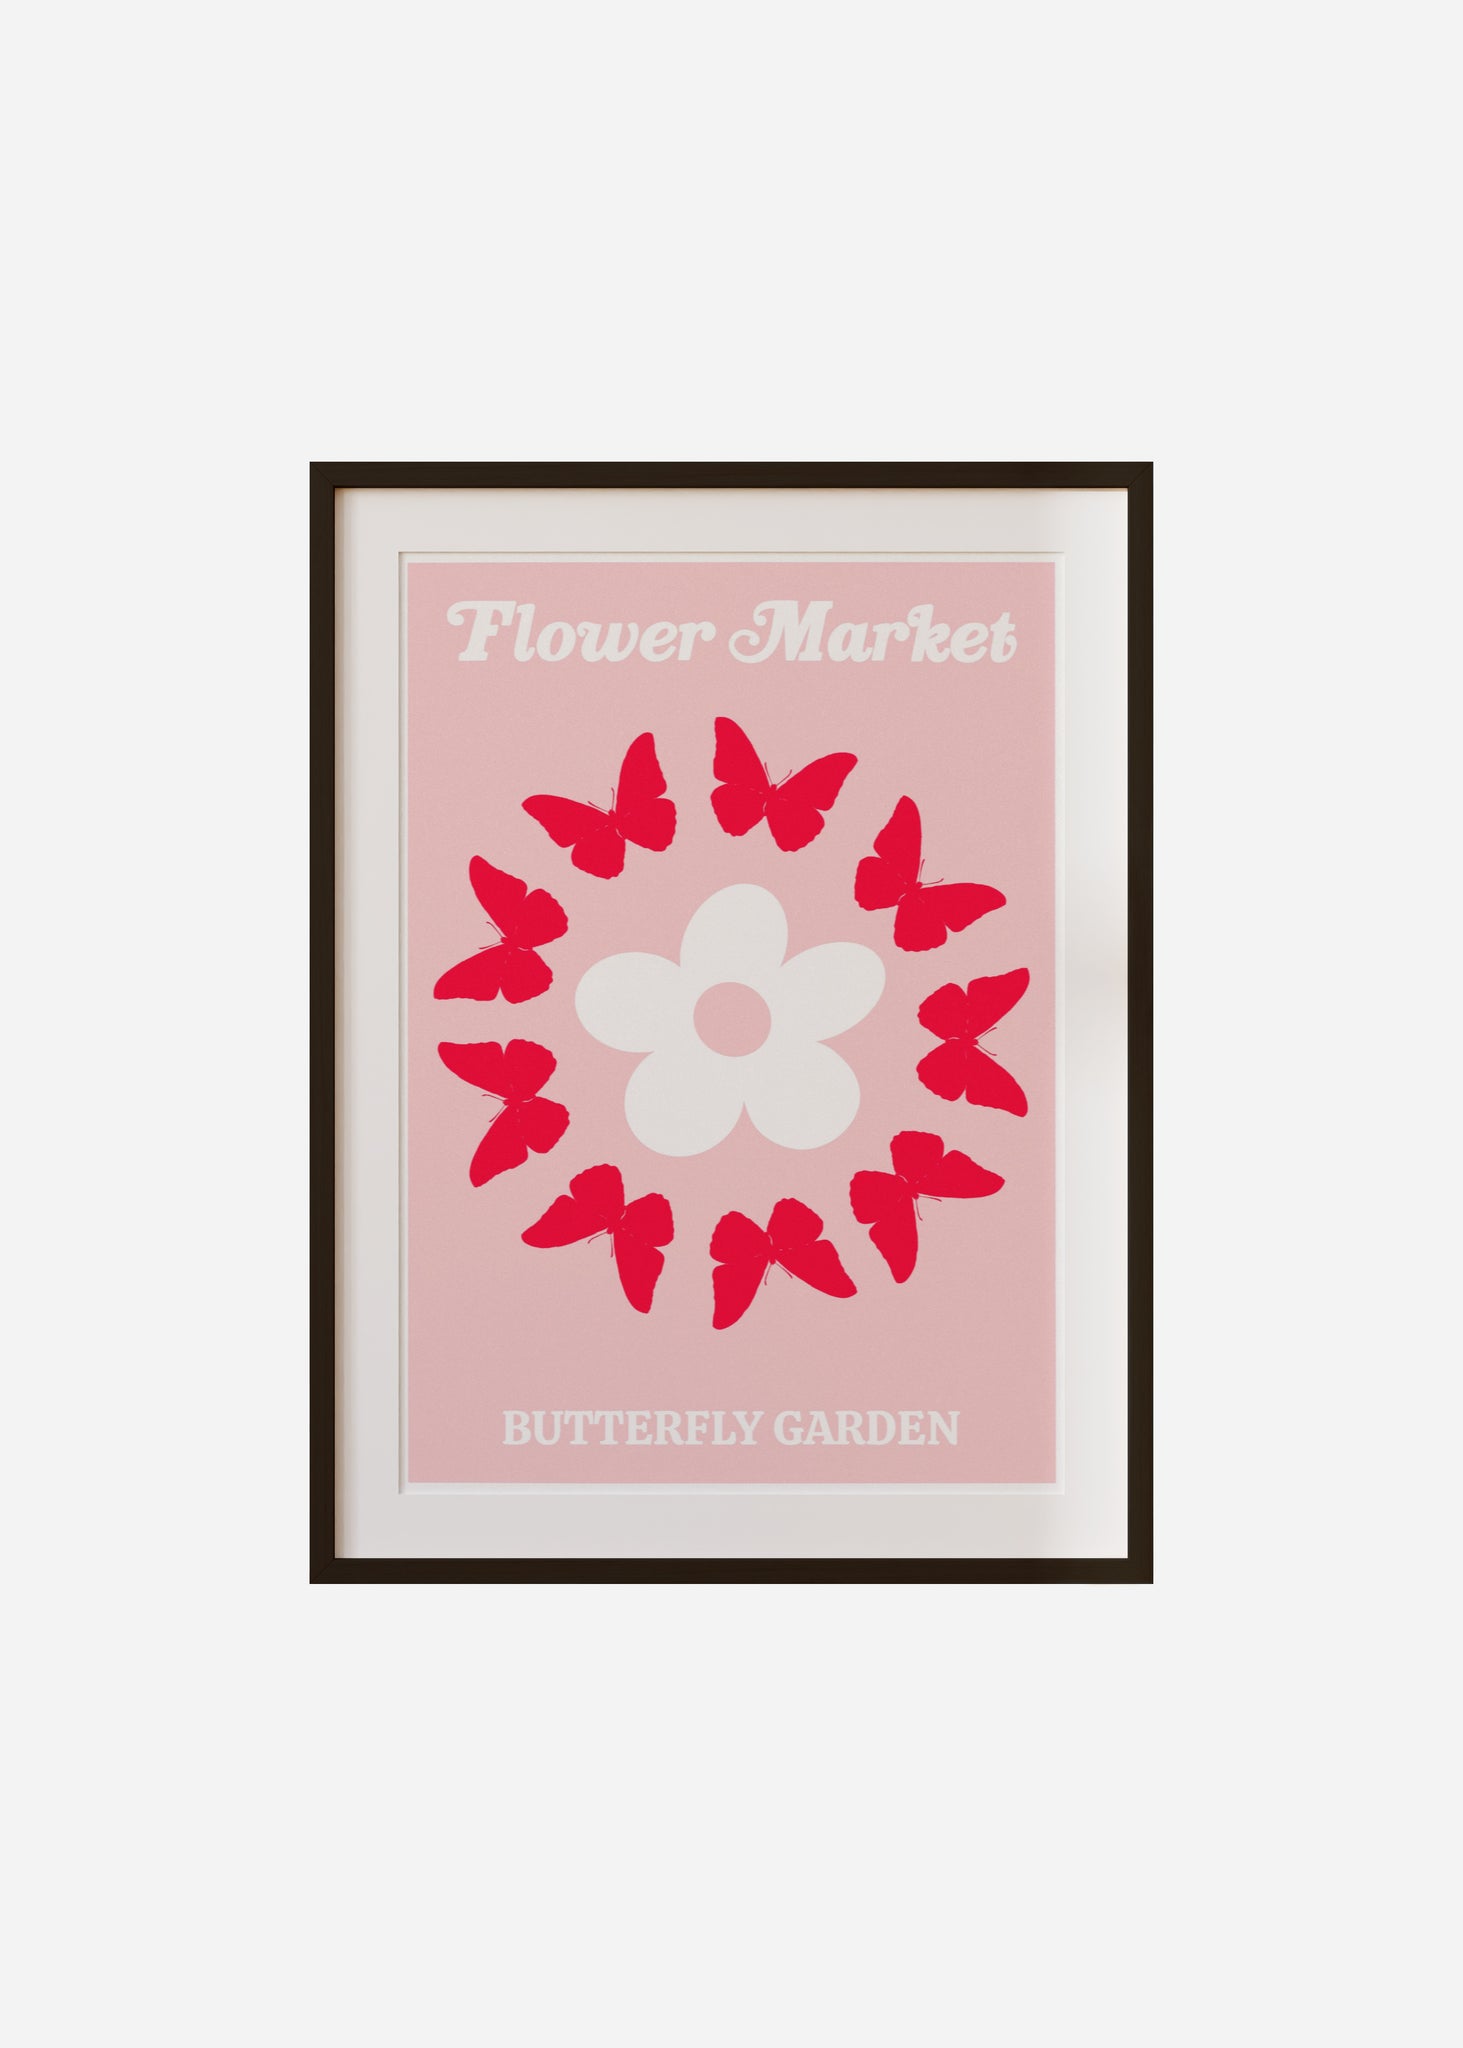 flower market / butterfly garden Framed & Mounted Print